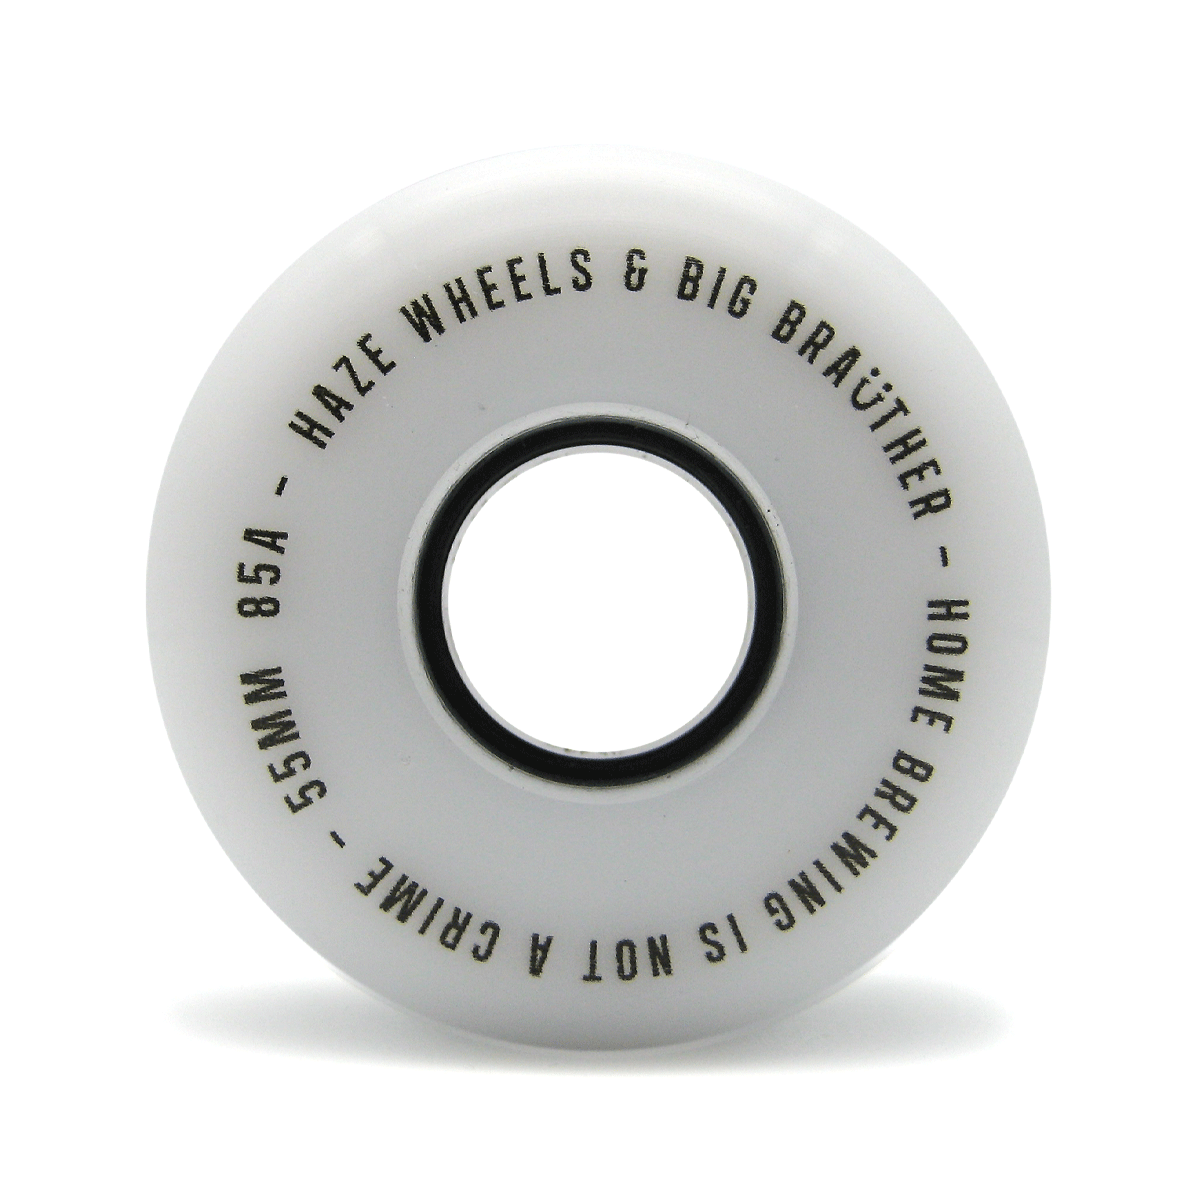 Haze wheels X Big Brauther 55mm 85a